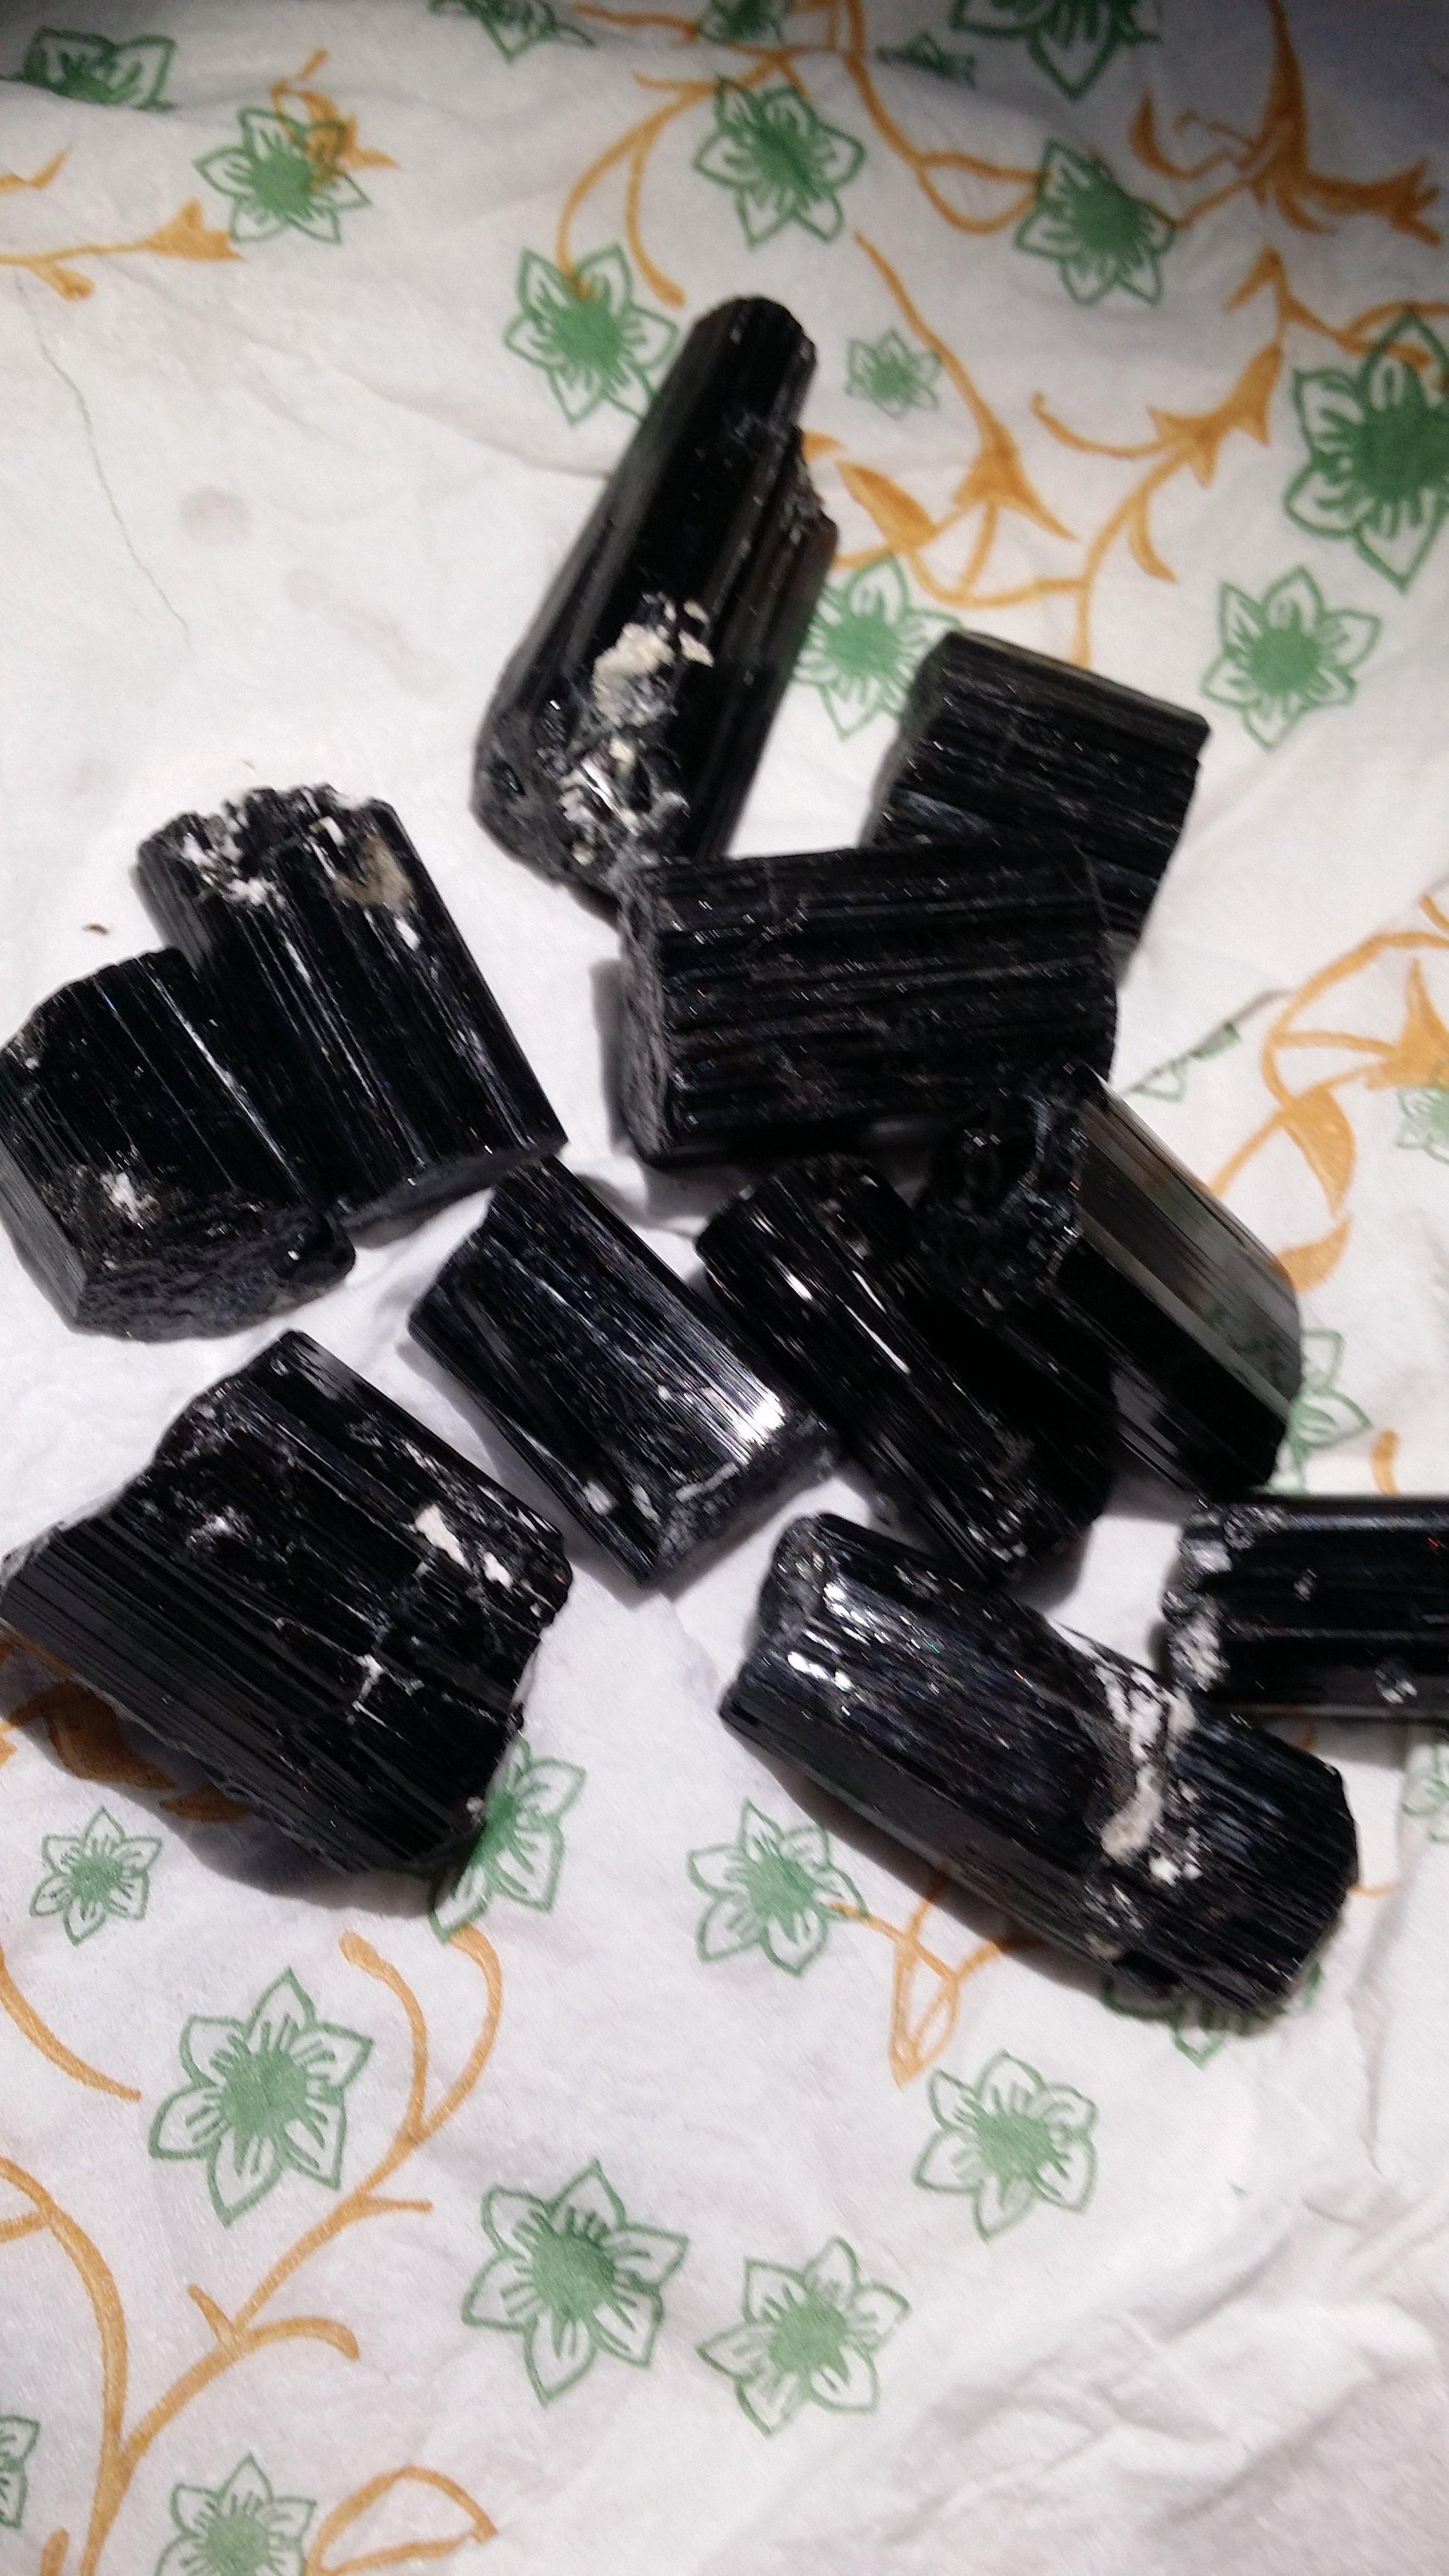 Natural black tourmaline rough gemstones sale online